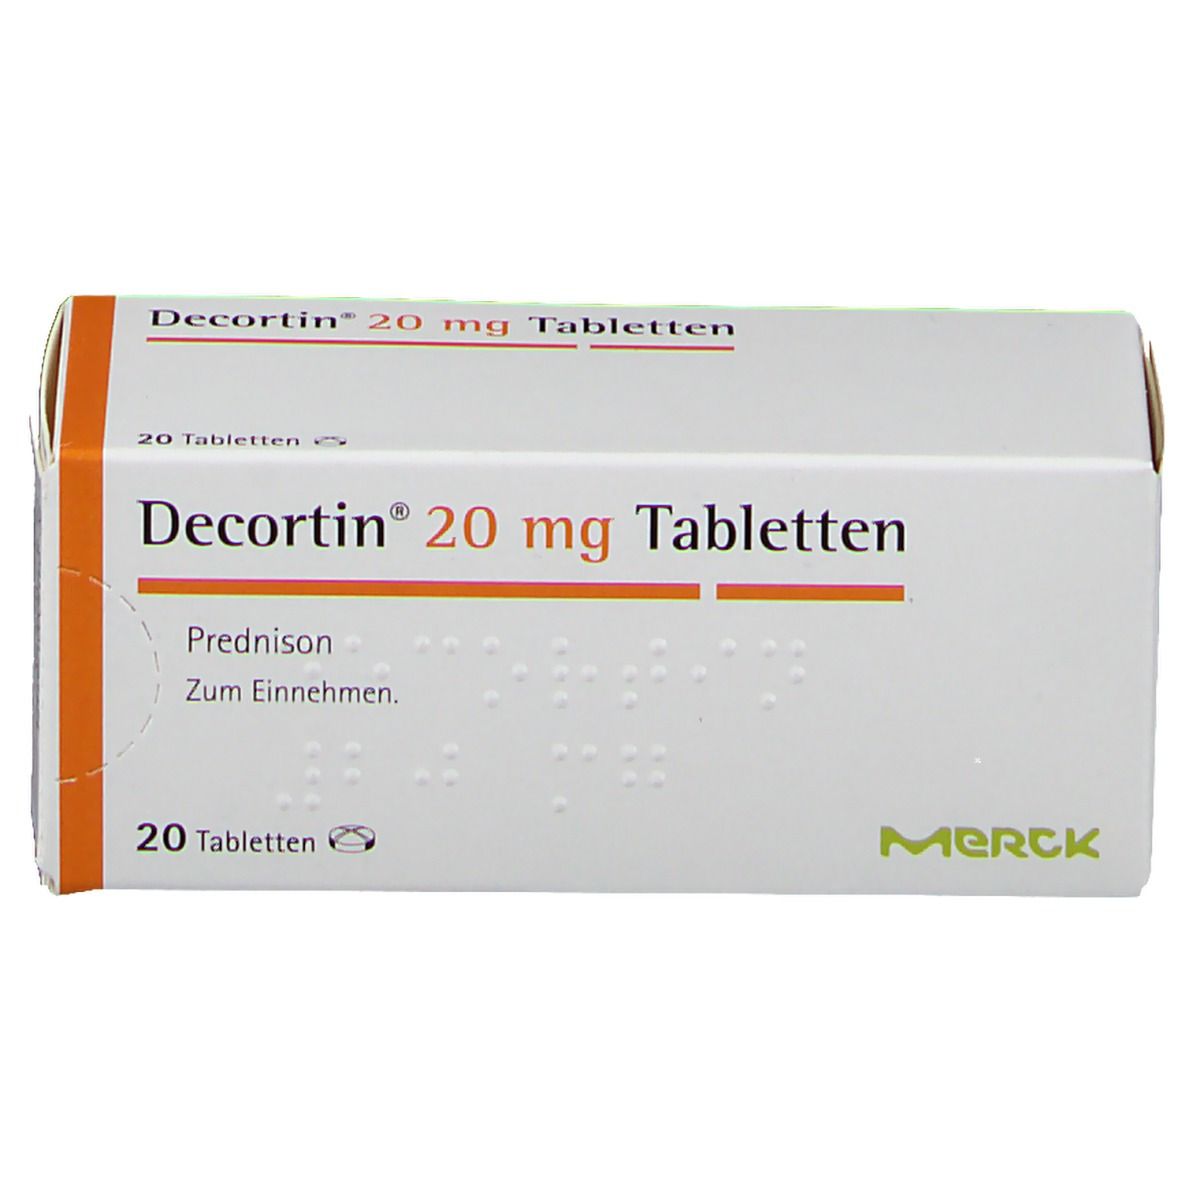 Decortin® 20 mg